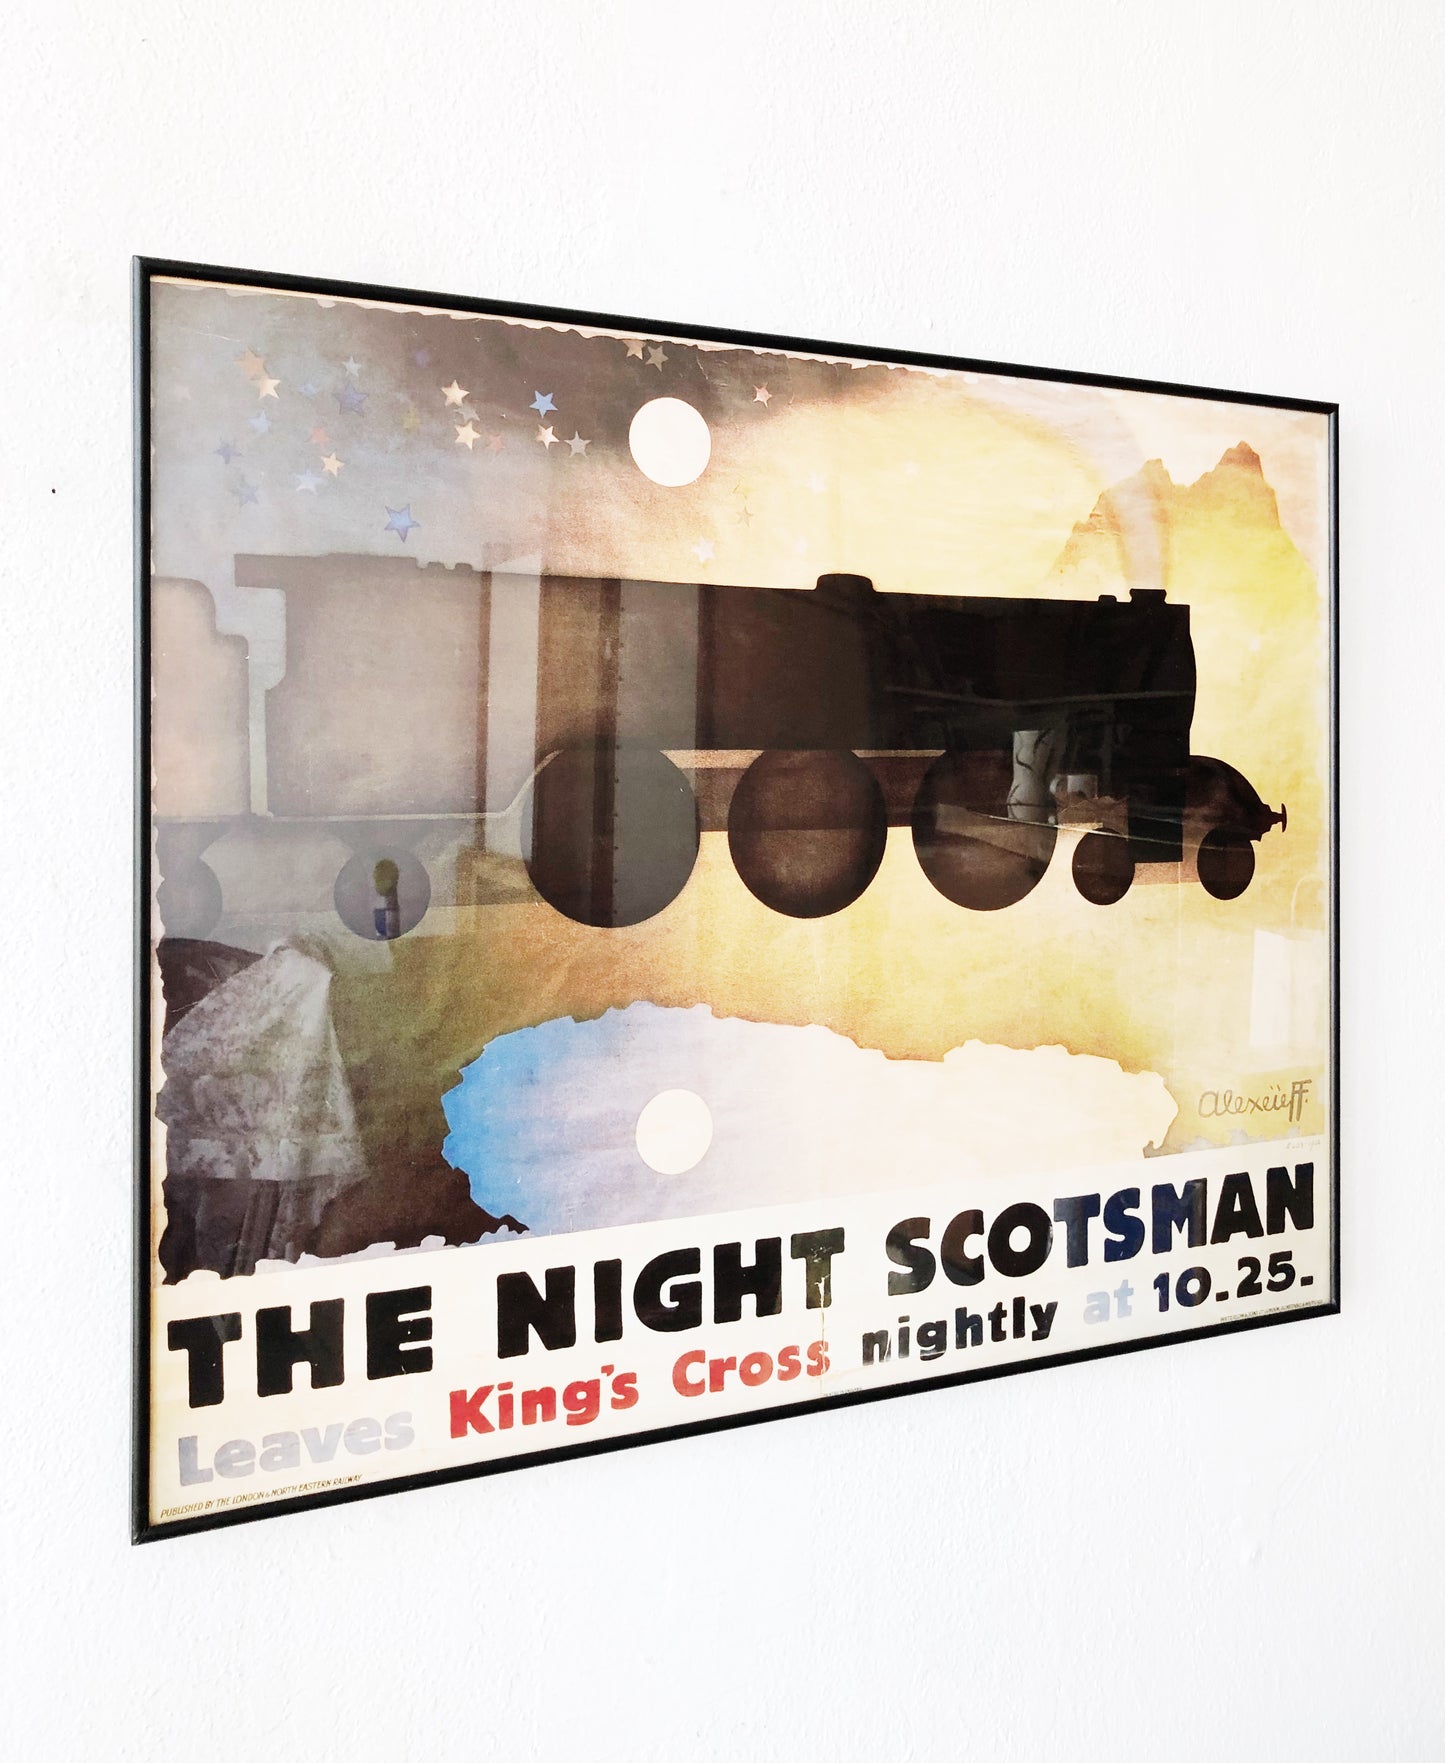 Vintage Night Scotsman Poster